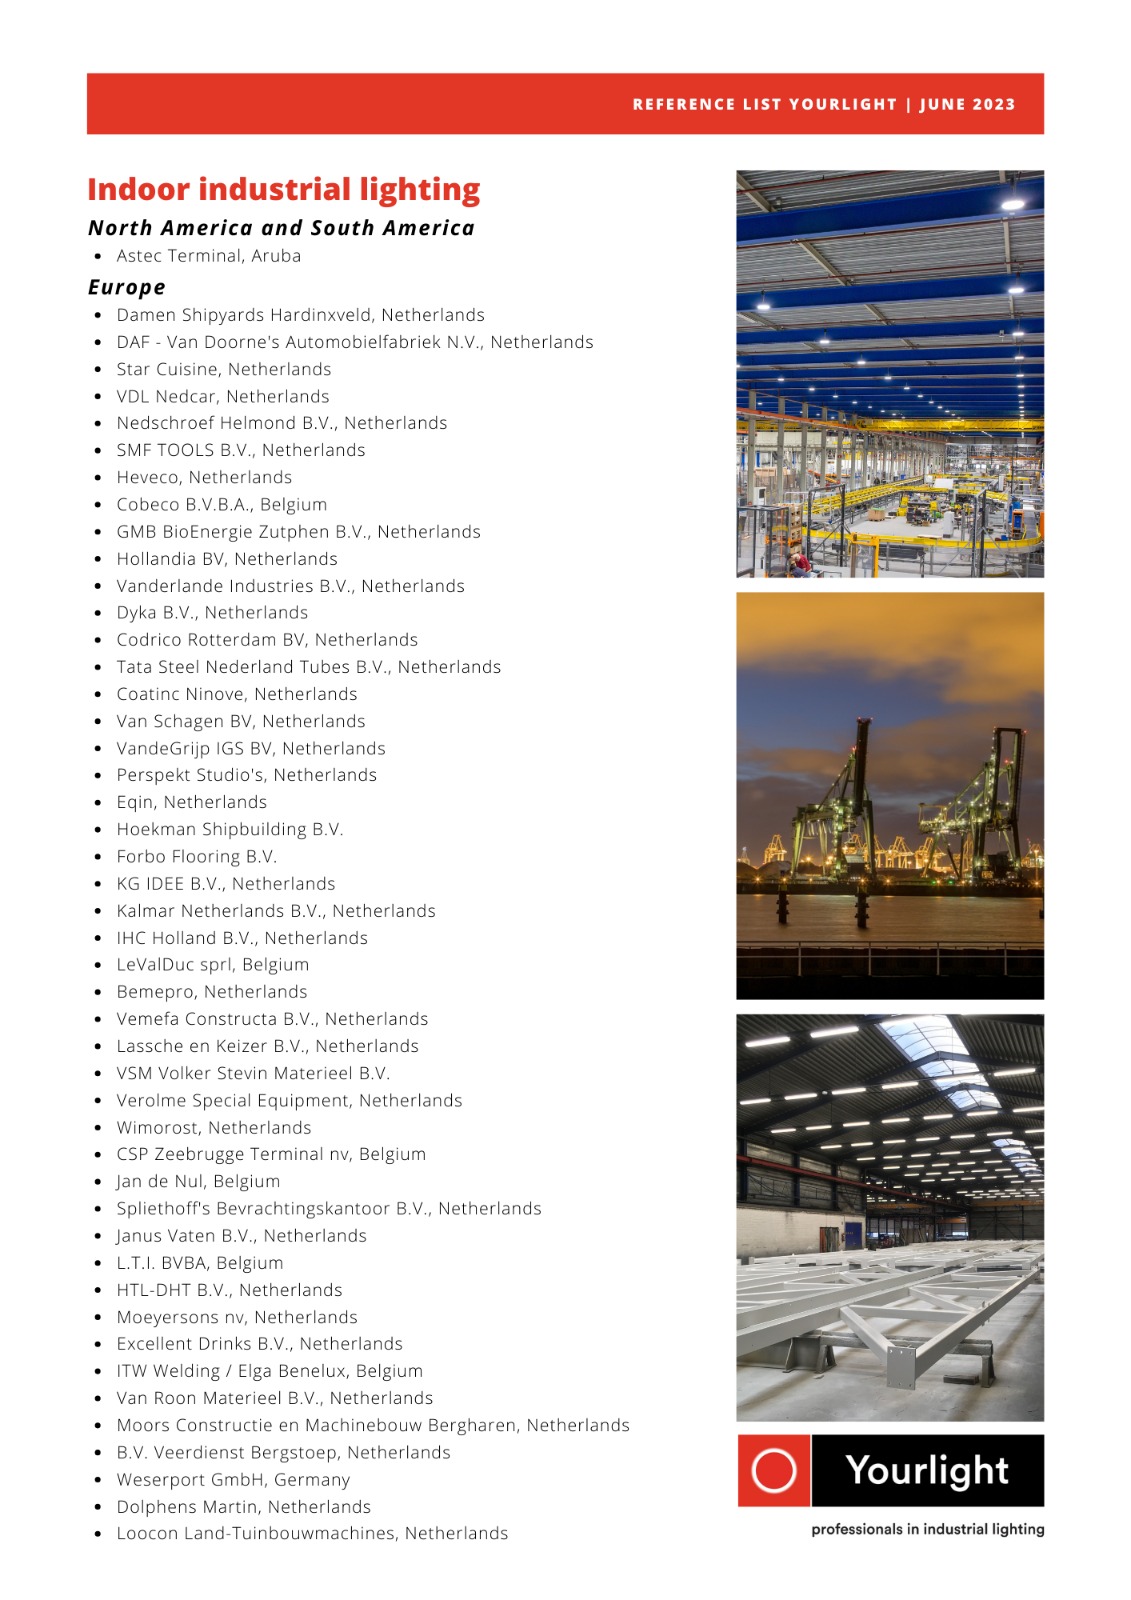 Indoor industrial lighting reference list